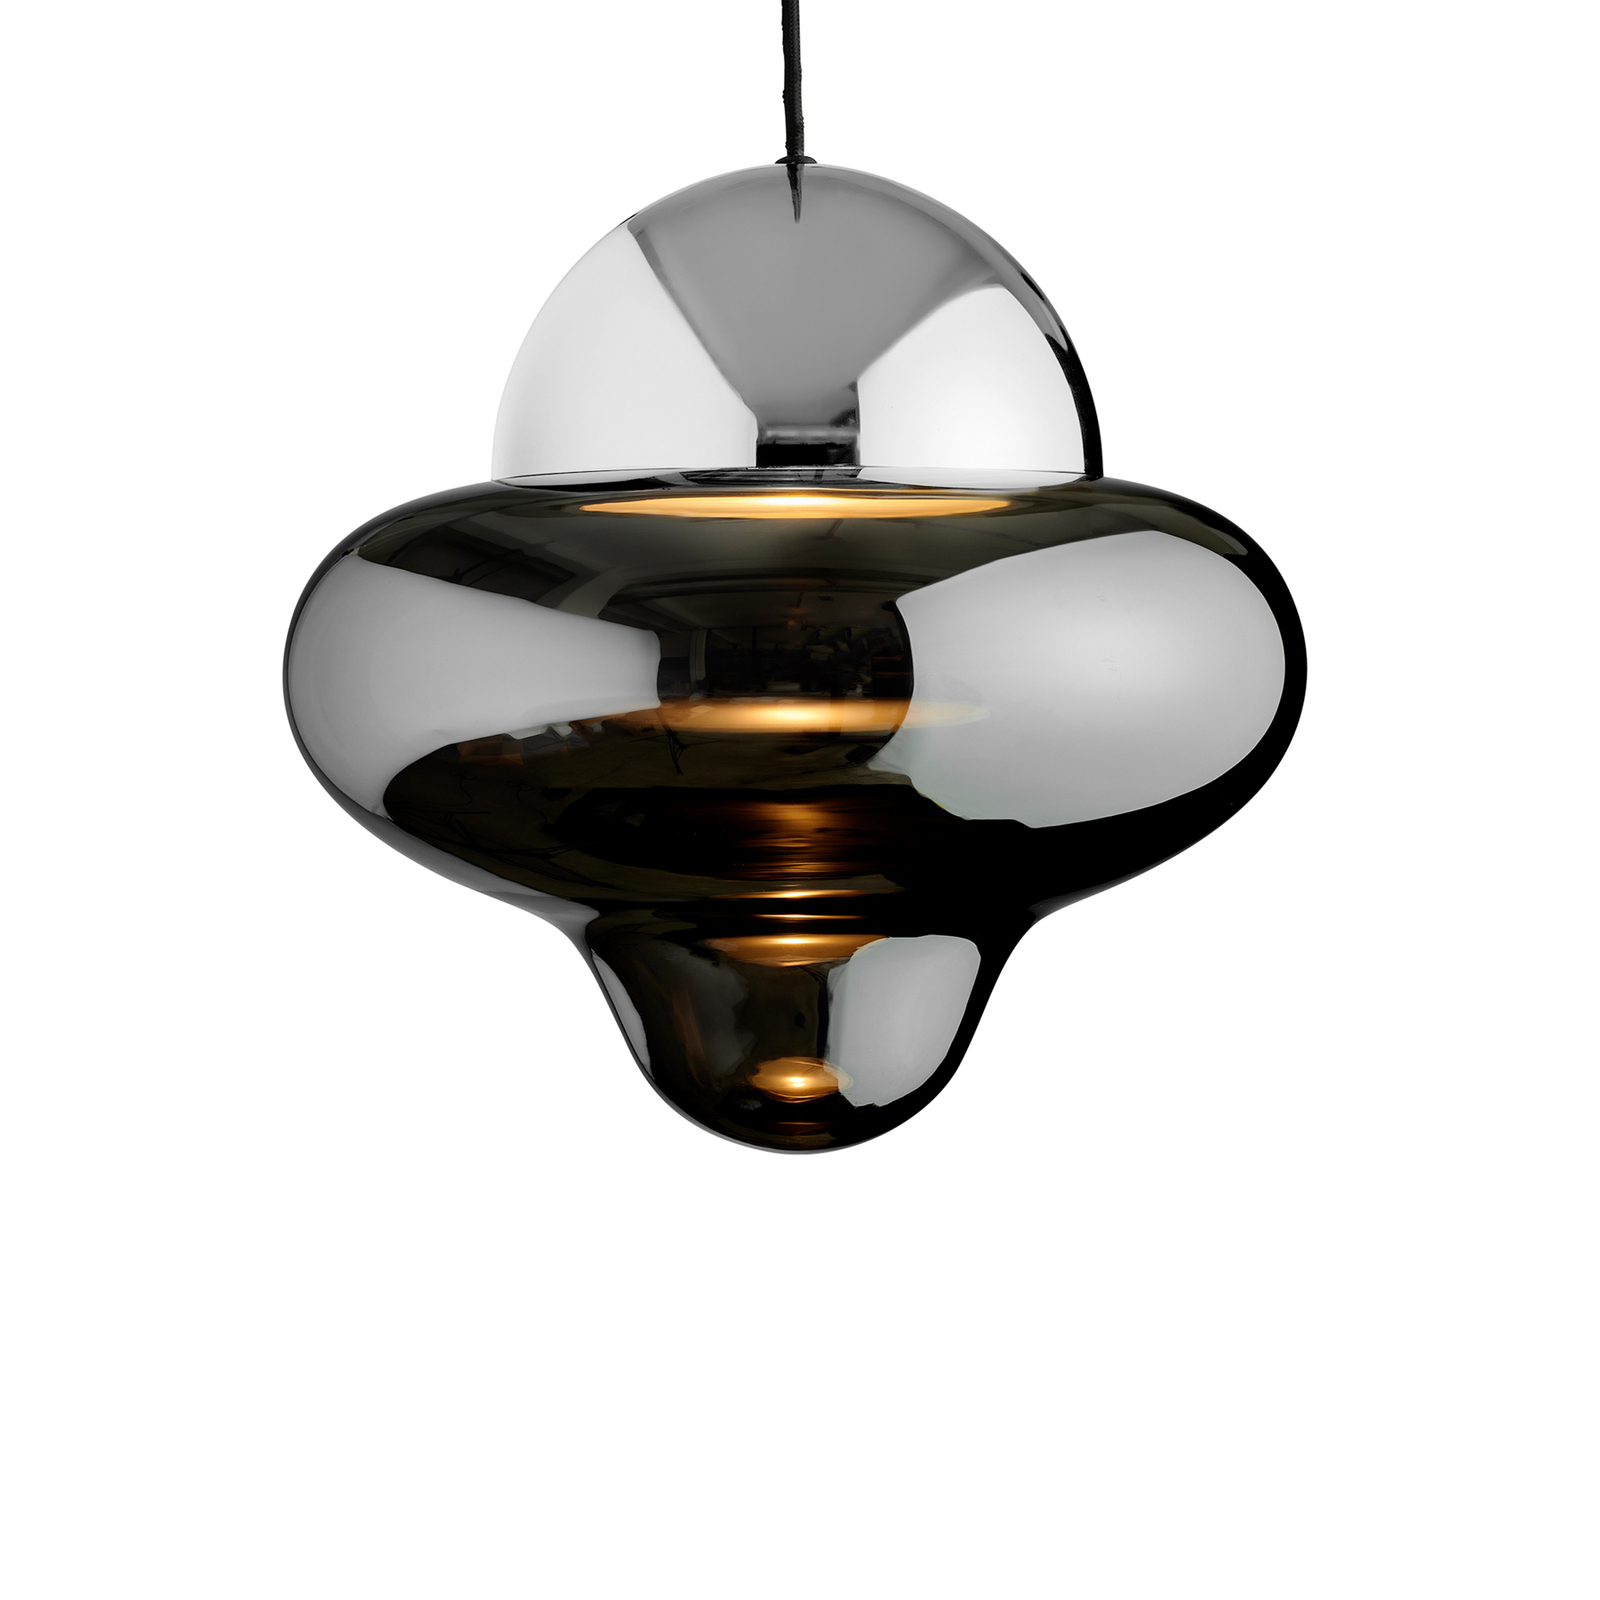 Hanglamp Nutty XL, rookgrijs / chroomkleurig, Ø 30 cm